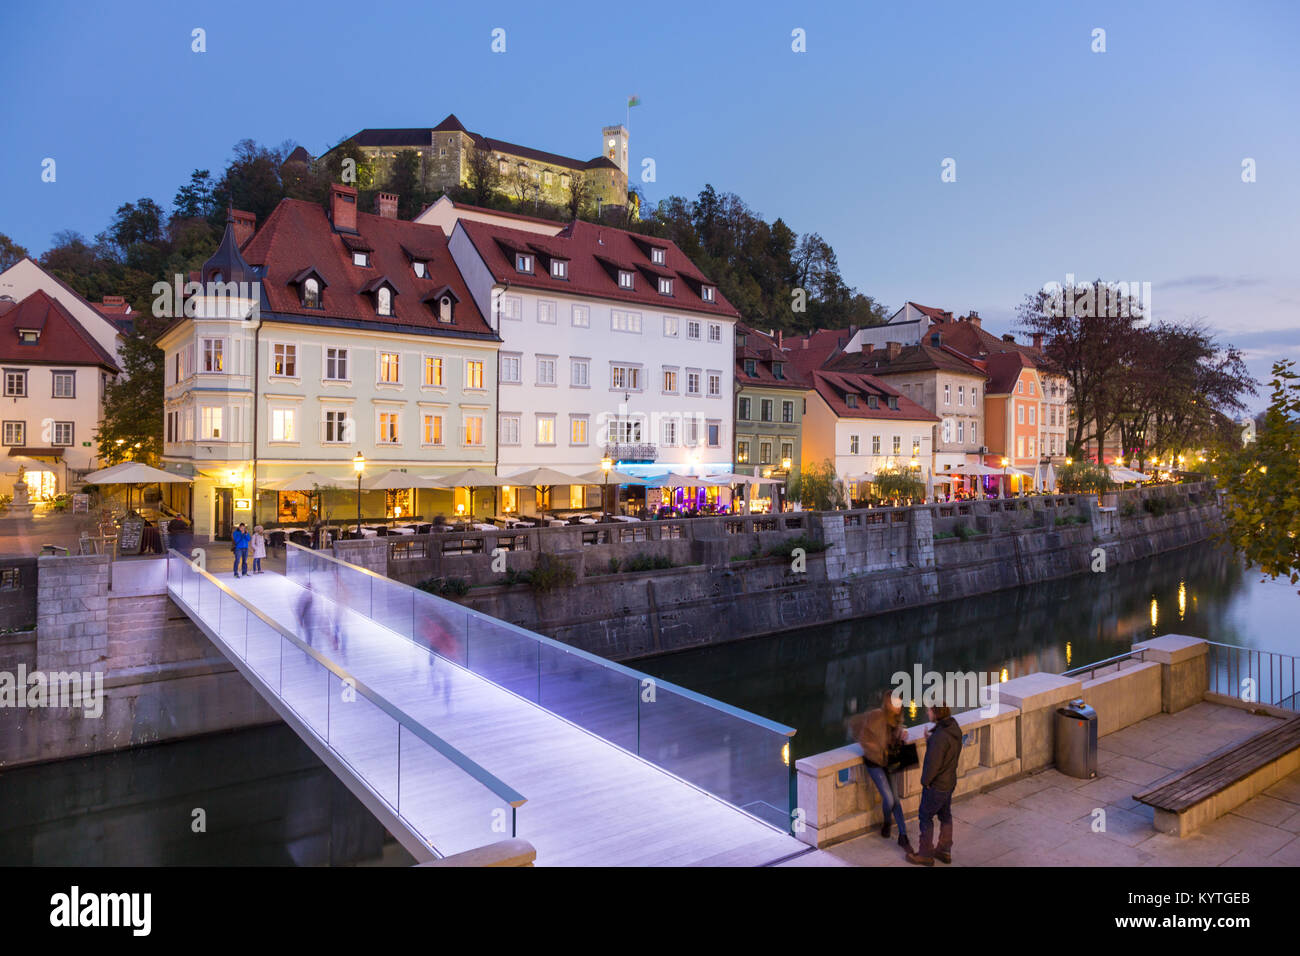 Abend Panorama der Riverfront von Ljubljana, Slowenien. Stockfoto